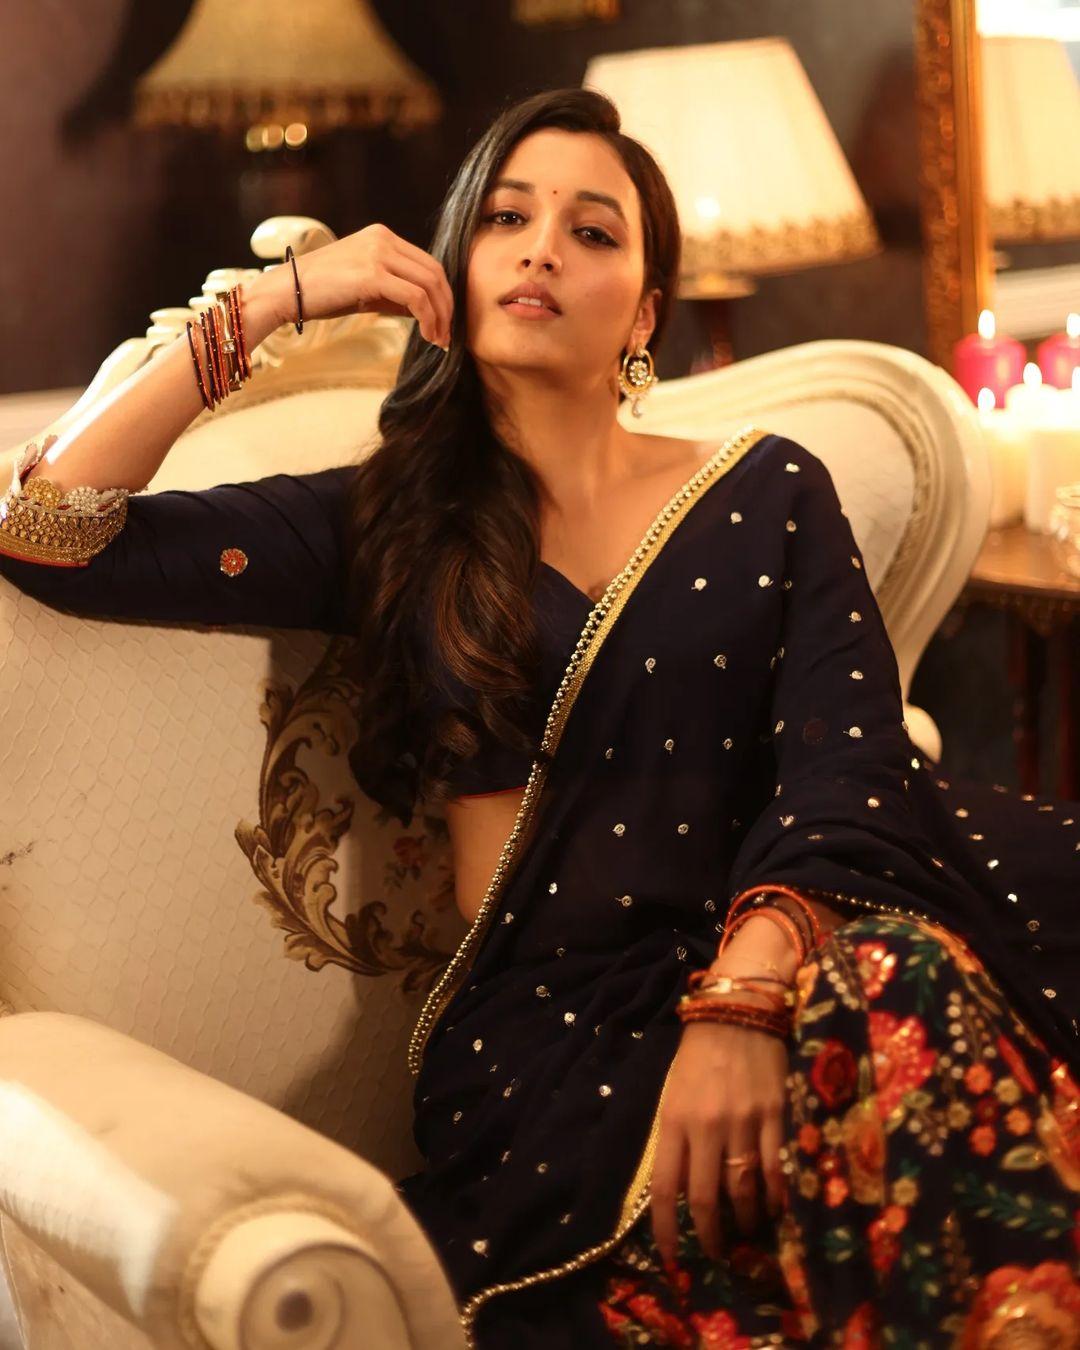 Kgf Actress Srinidhi Shetty In Half Saree Hot Photos Looking Very Beautiful And Sexy